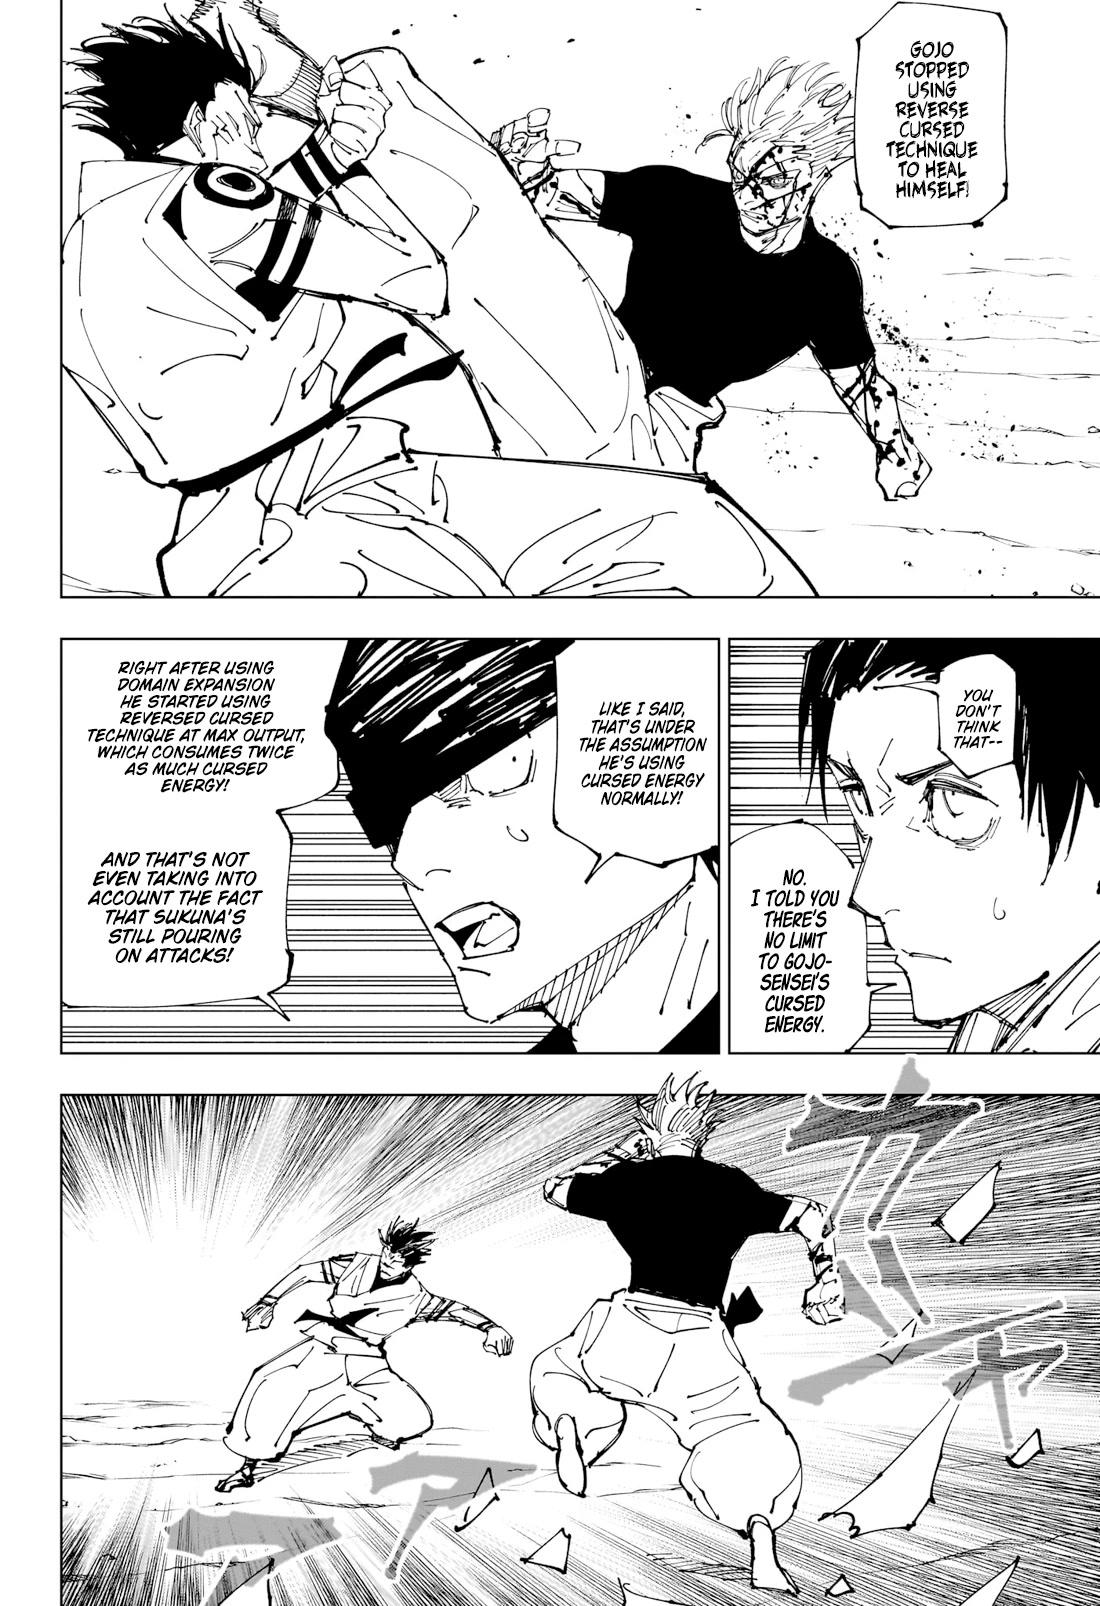 Jujutsu Kaisen Chapter 226: The Decisive Battle In The Uninhabited, Demon-Infested Shinjuku ④ page 14 - Mangakakalot